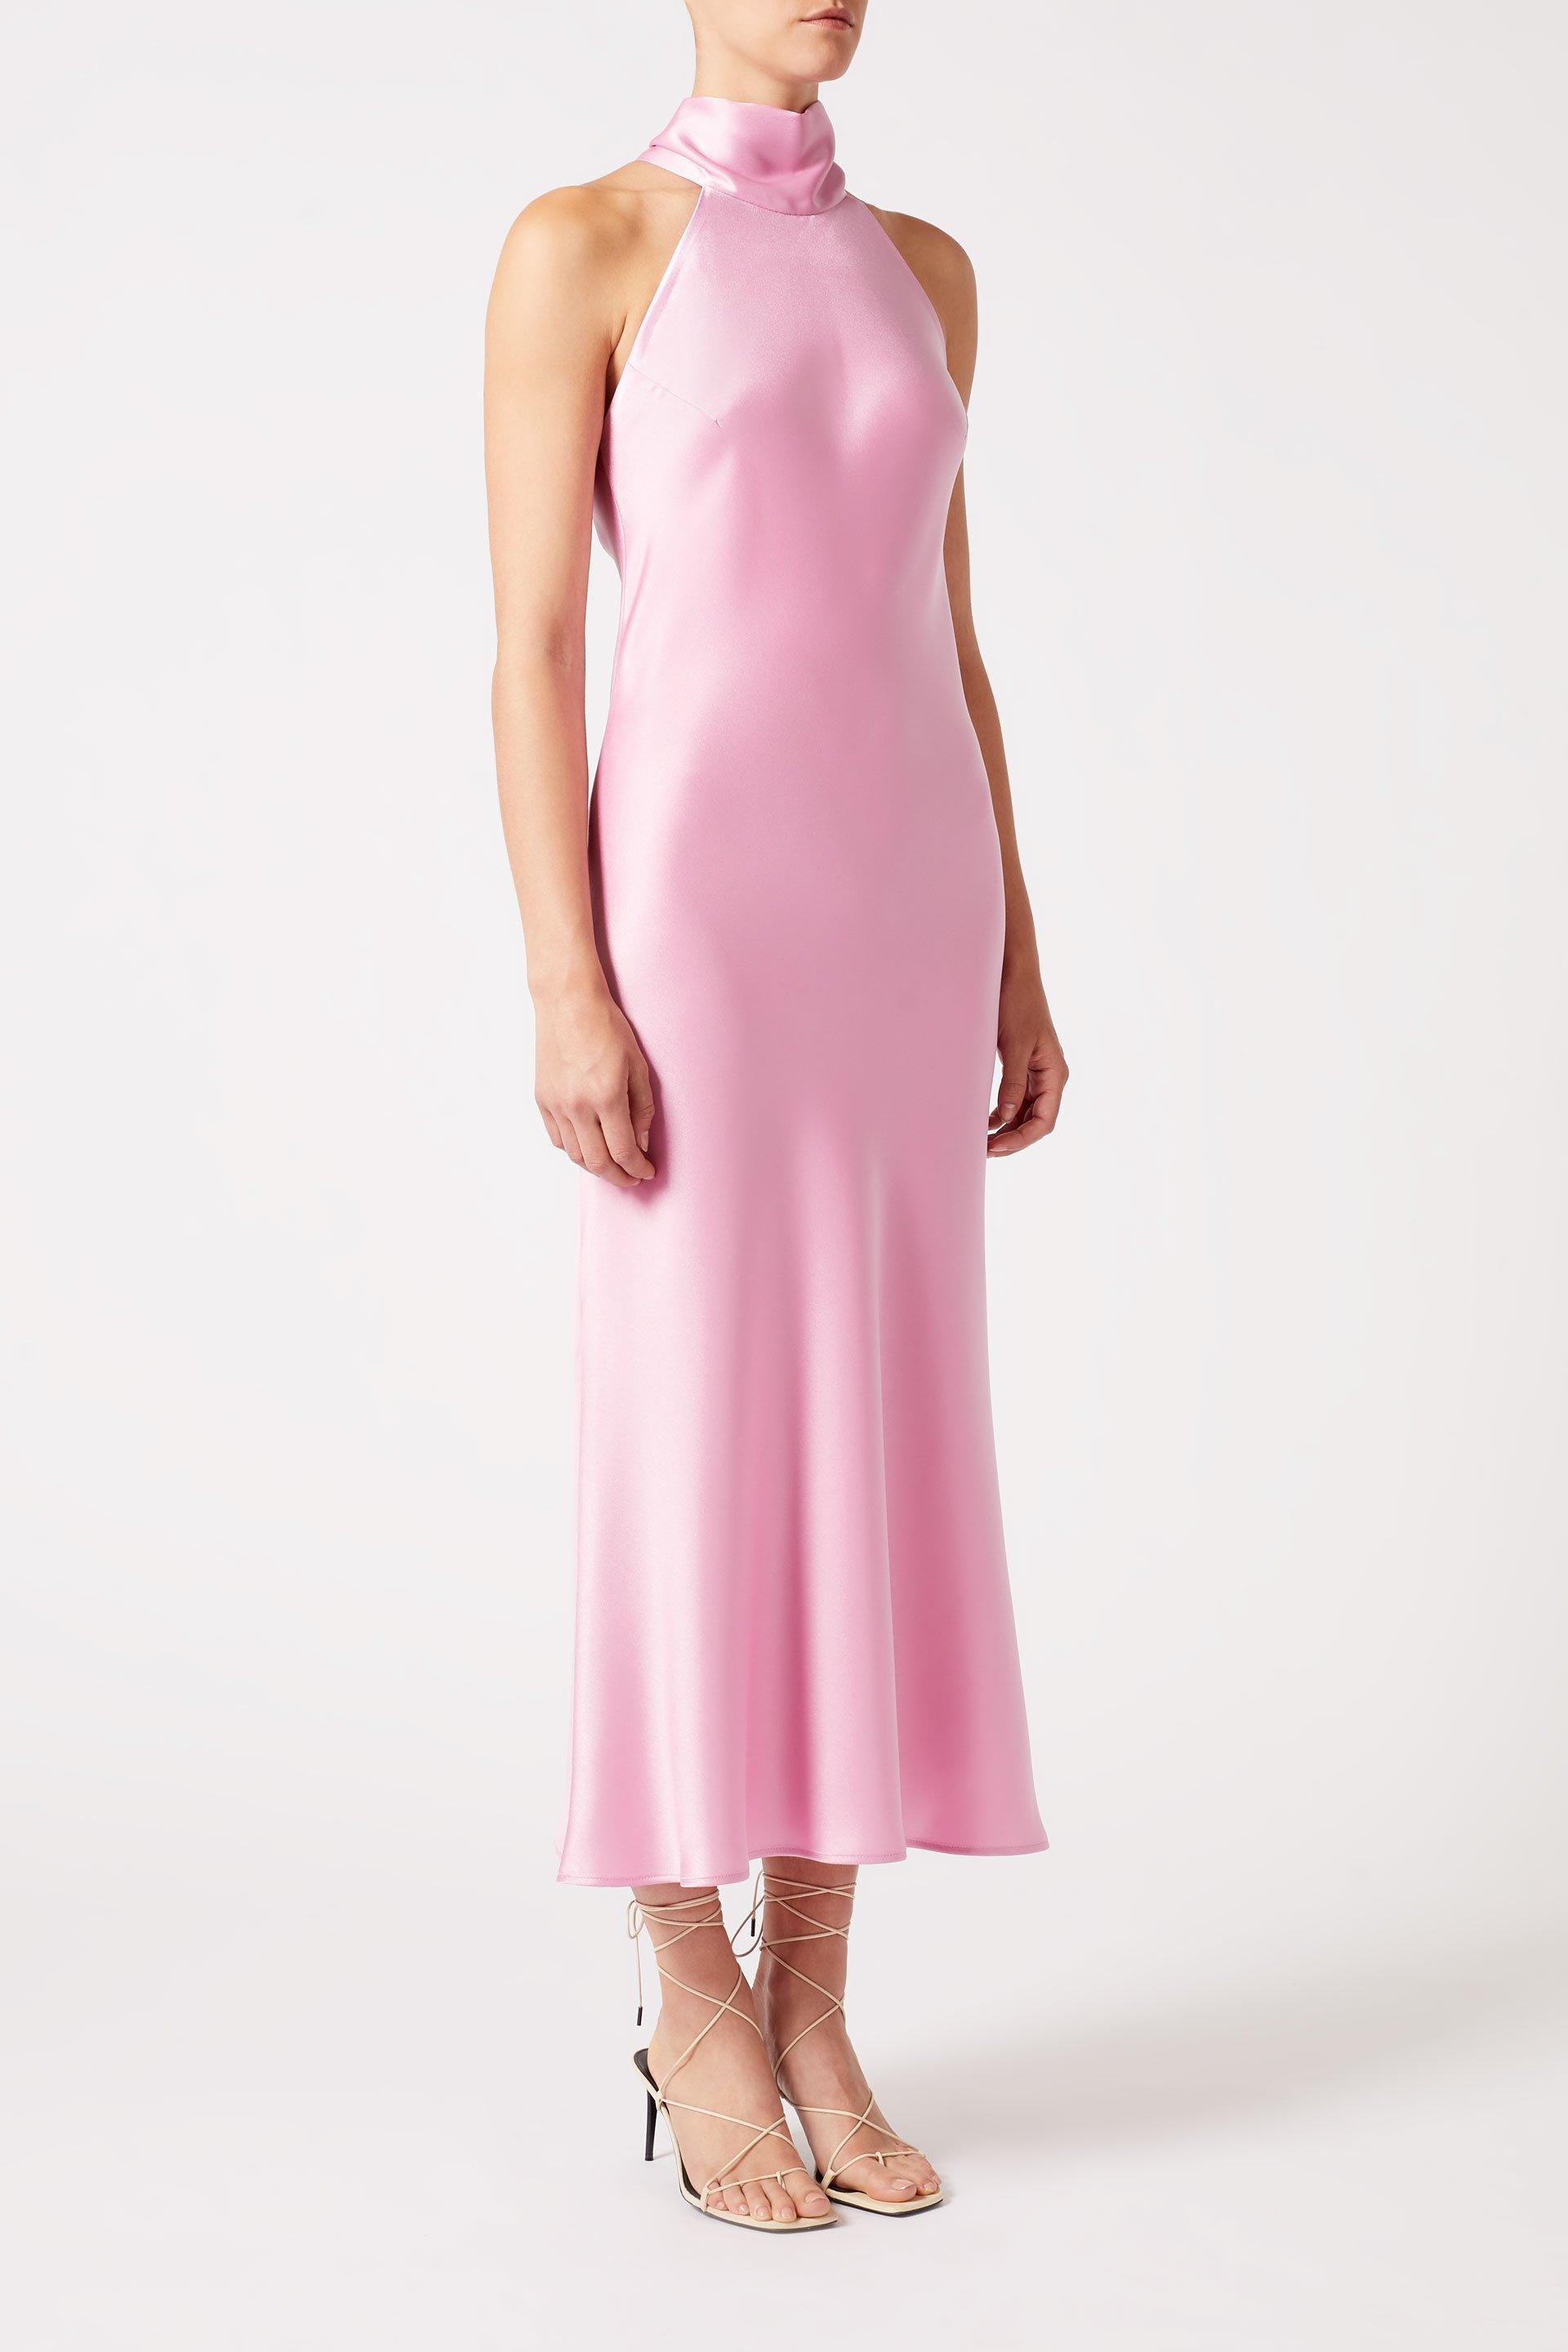 GALVAN London Cropped Sienna Dress in Pink - Lyst